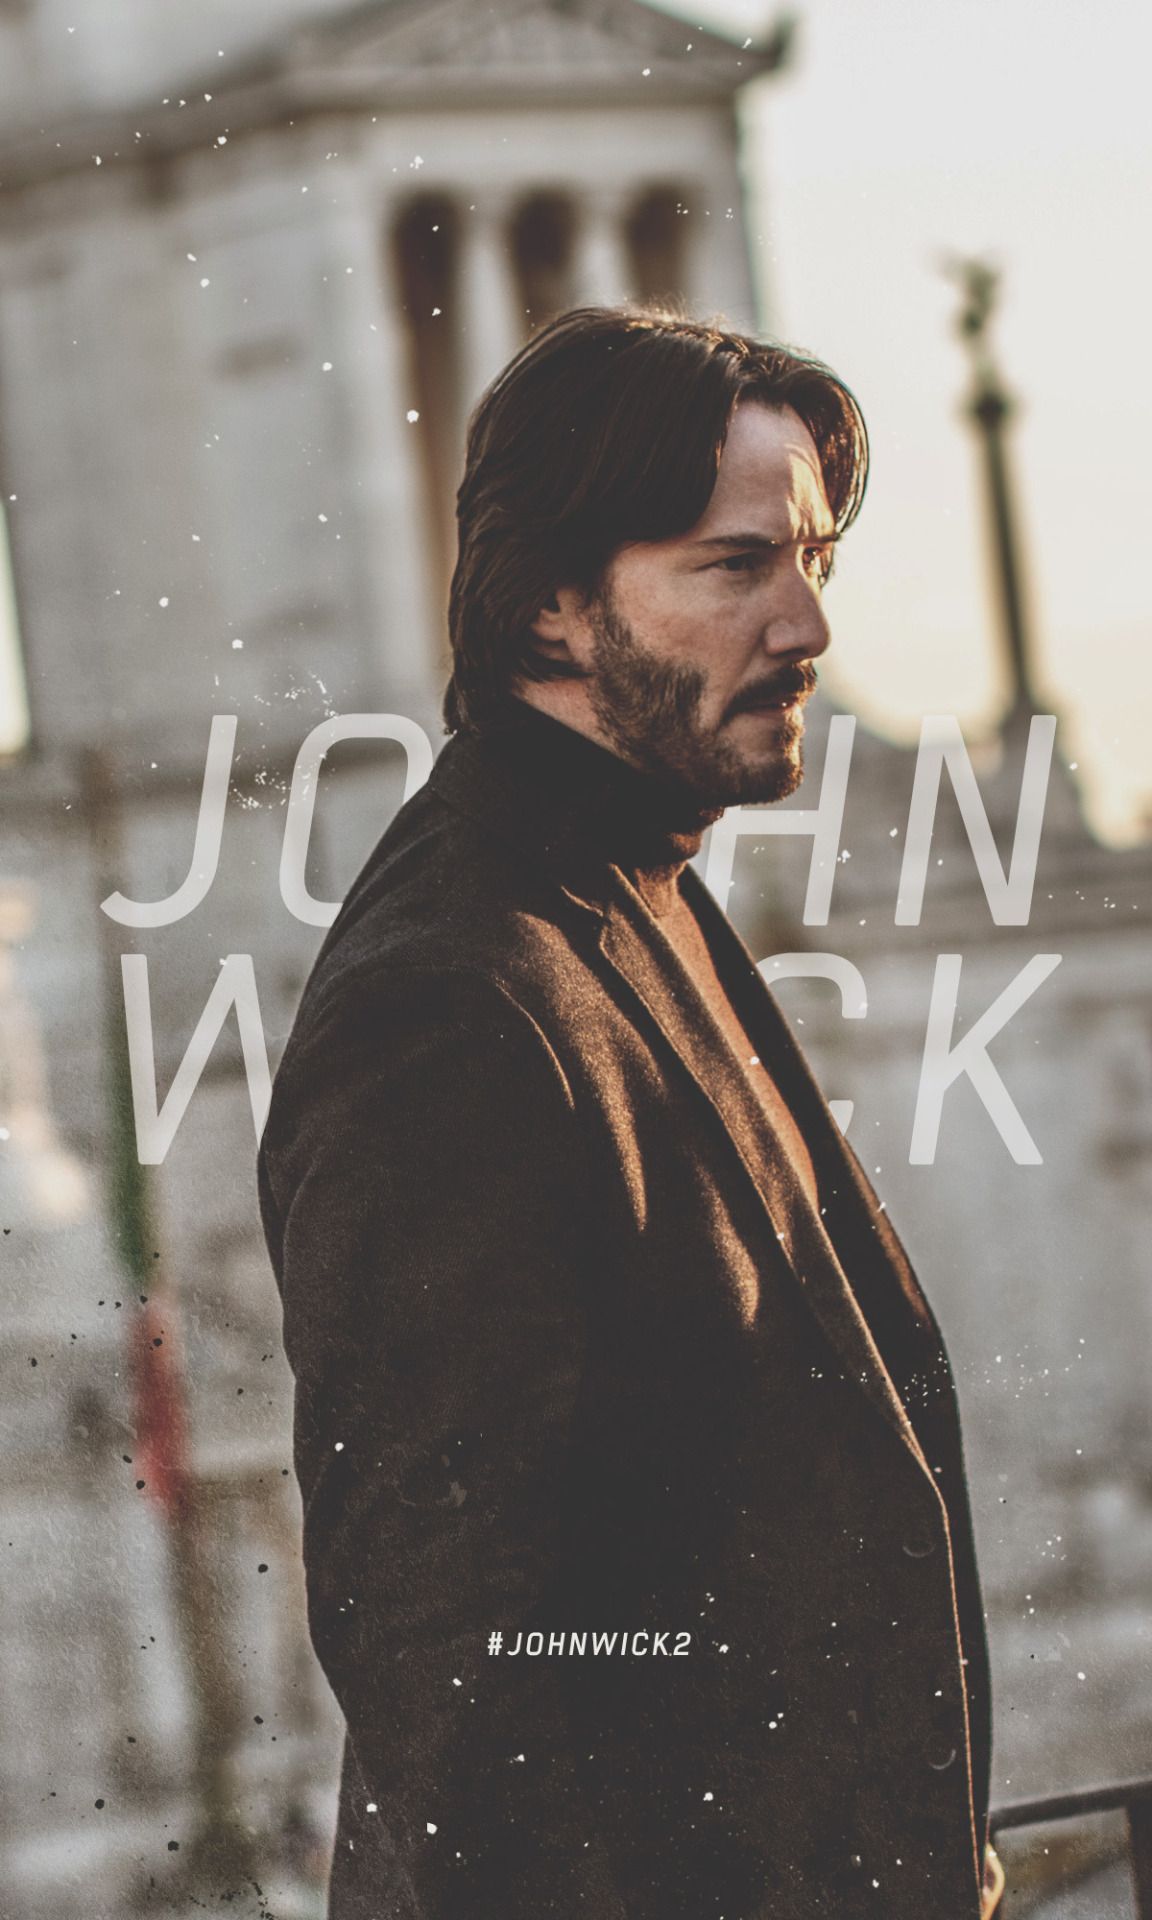 A new calling, same John Wick. He's back. John Wick: Chapter 2